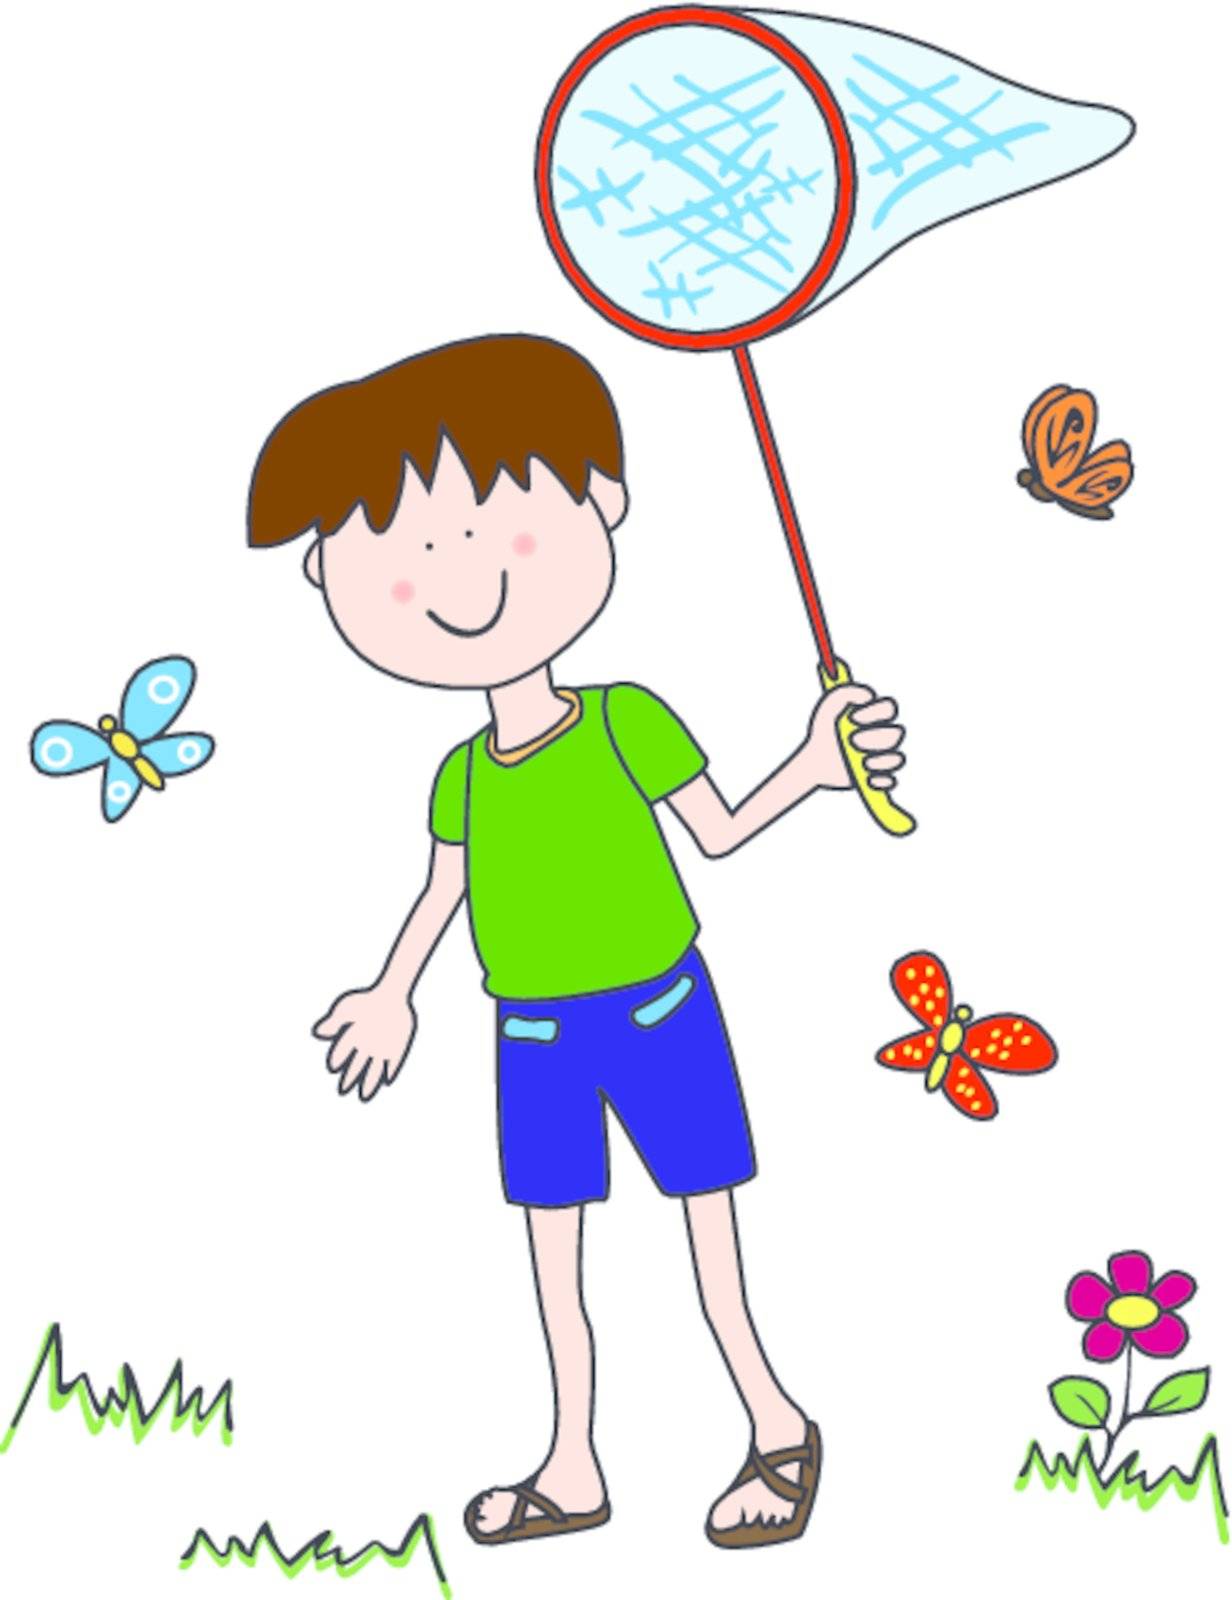 Little boy chasing butterflies during summer vacations.